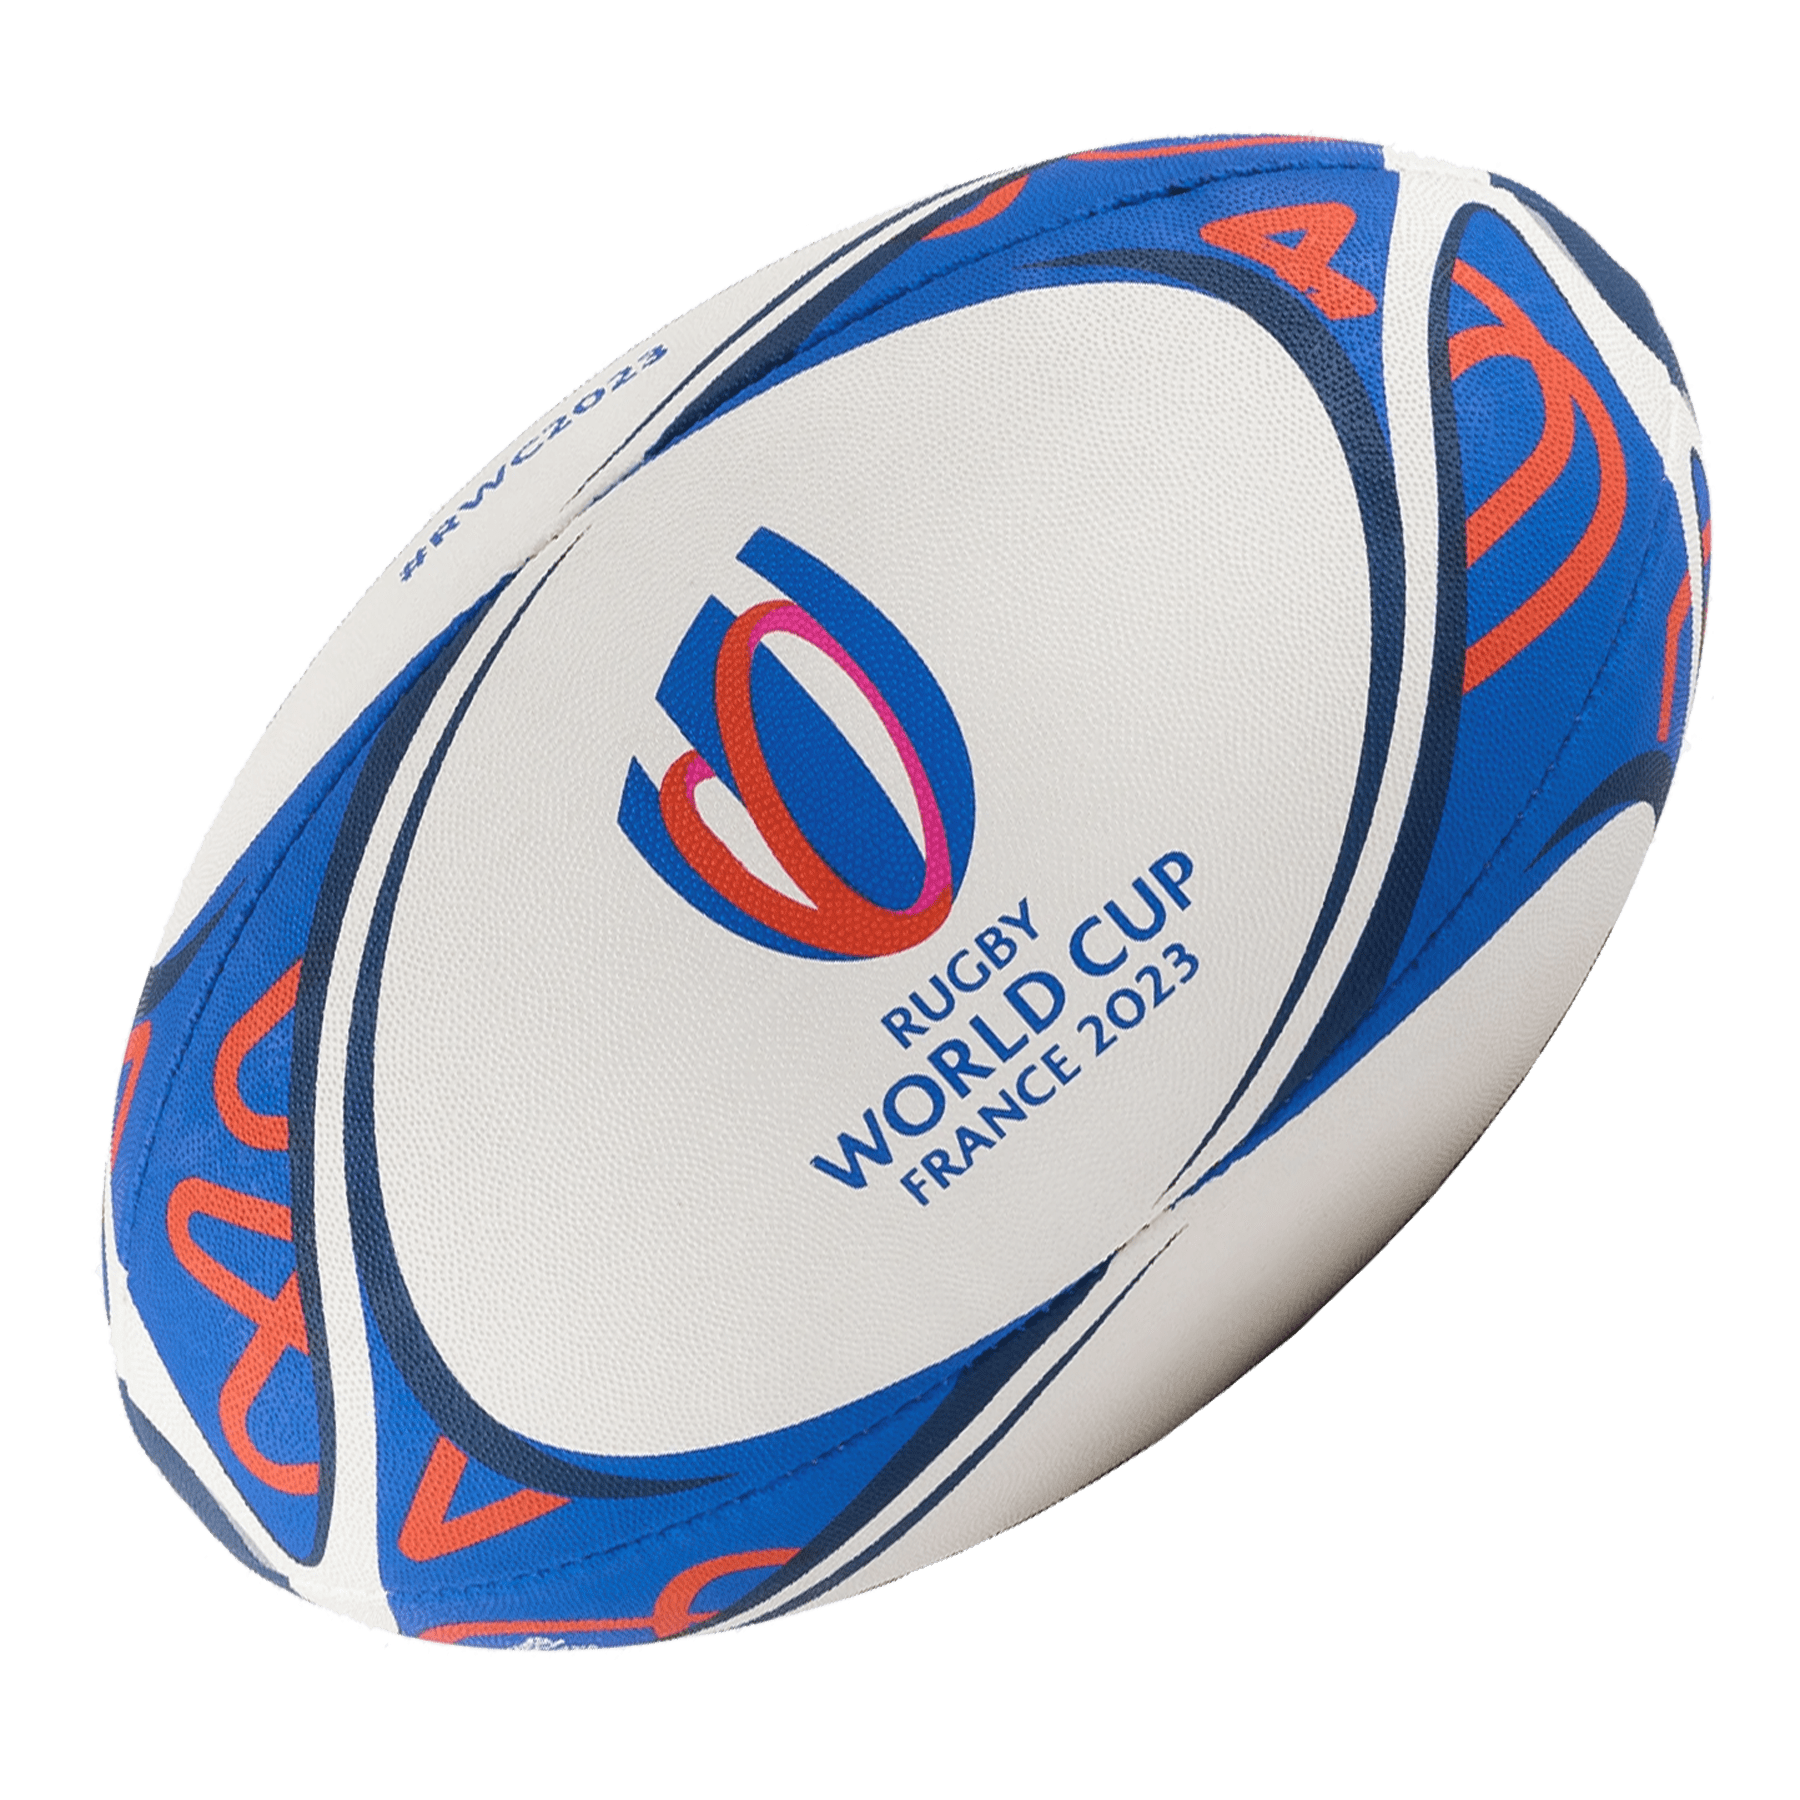 Rugby Kicking Tees  Kicking Tees - World Rugby Shop